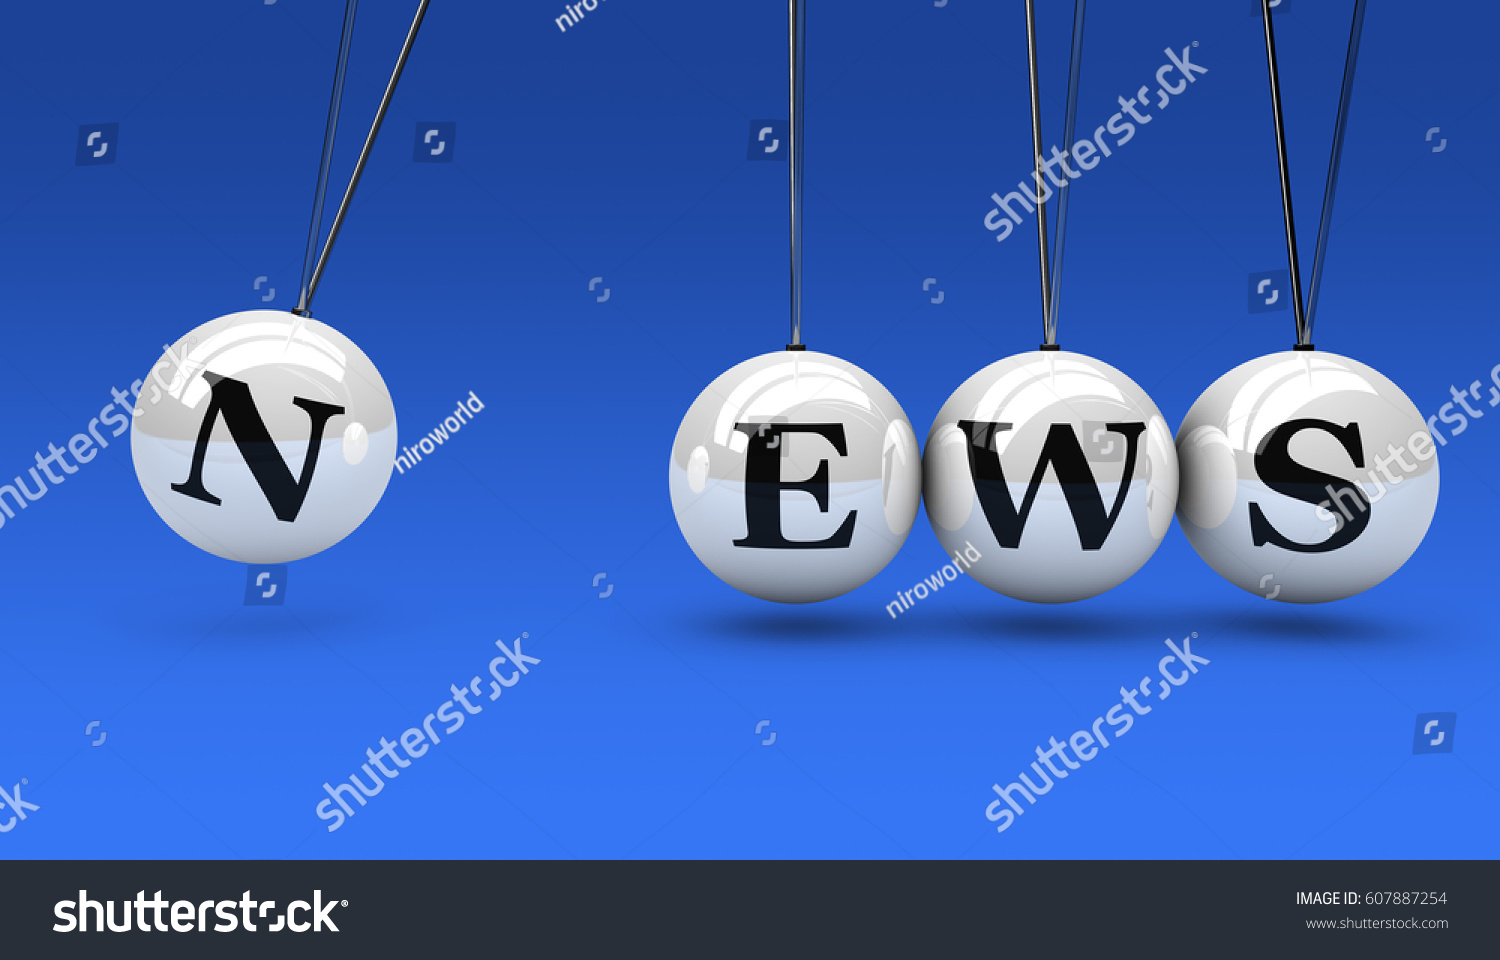 News Sign Word On Hanged Spheres Stock Illustration 607887254